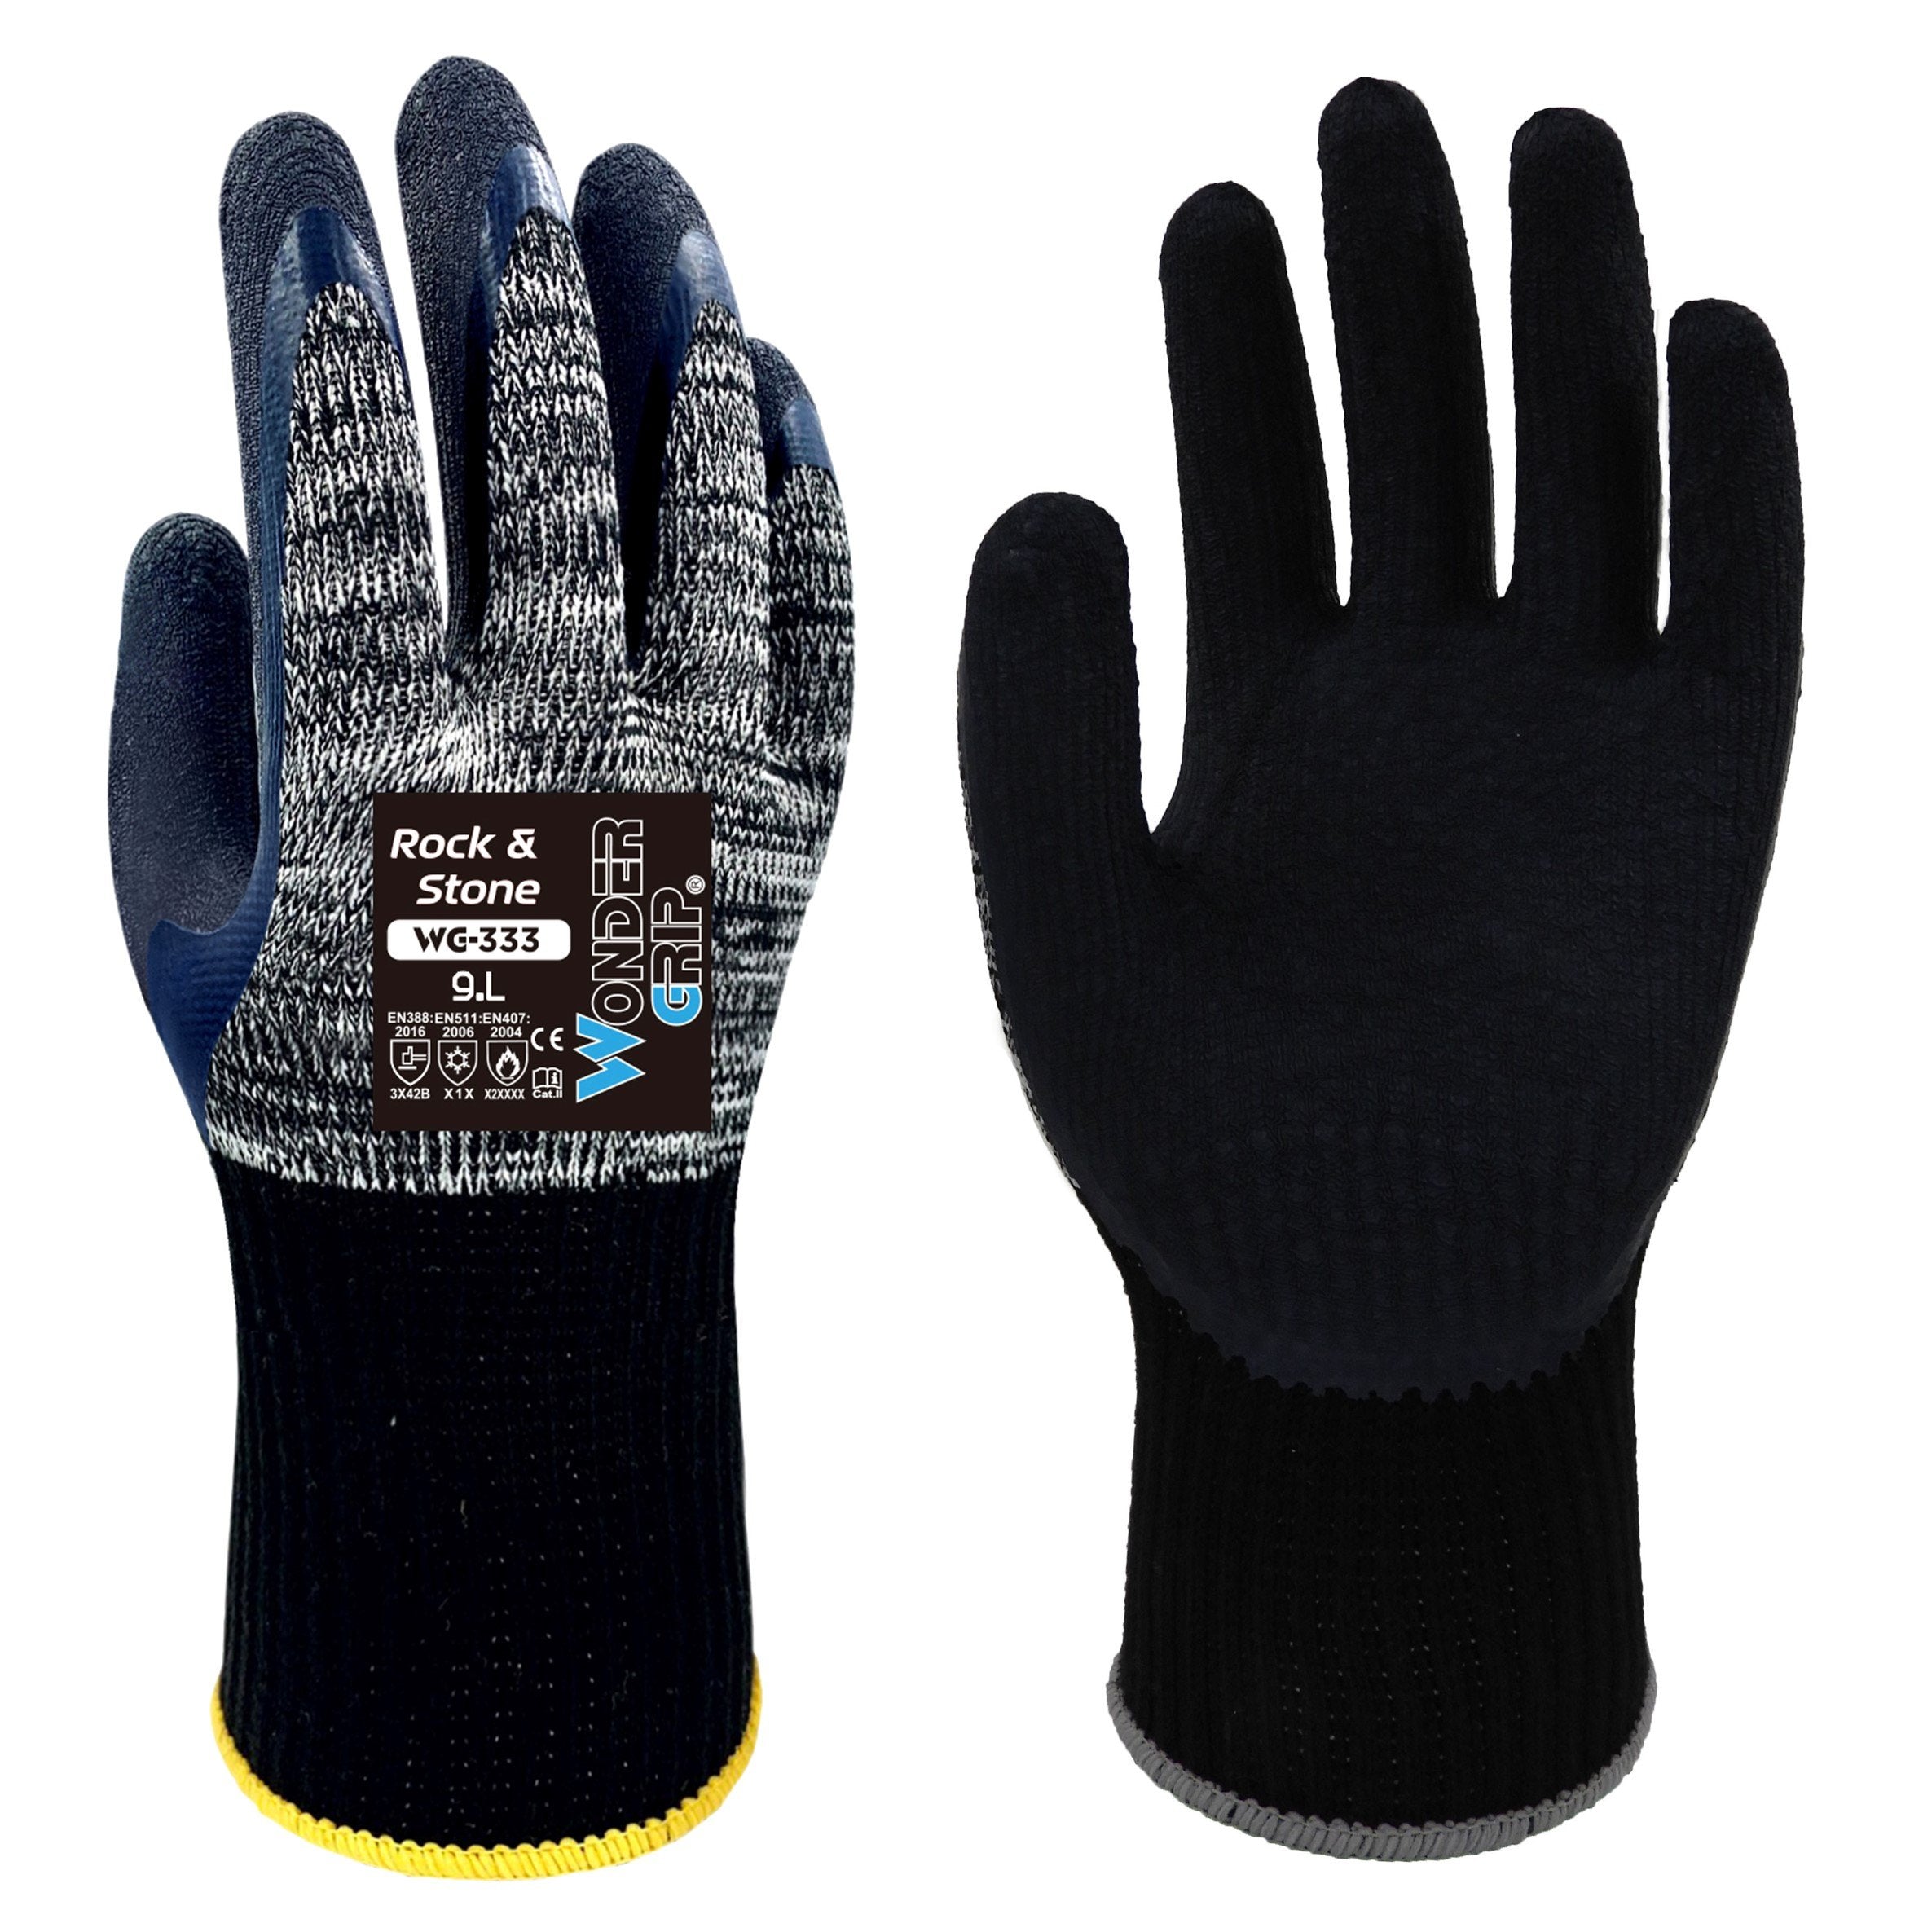 WG-333 Rock & Stone Gloves